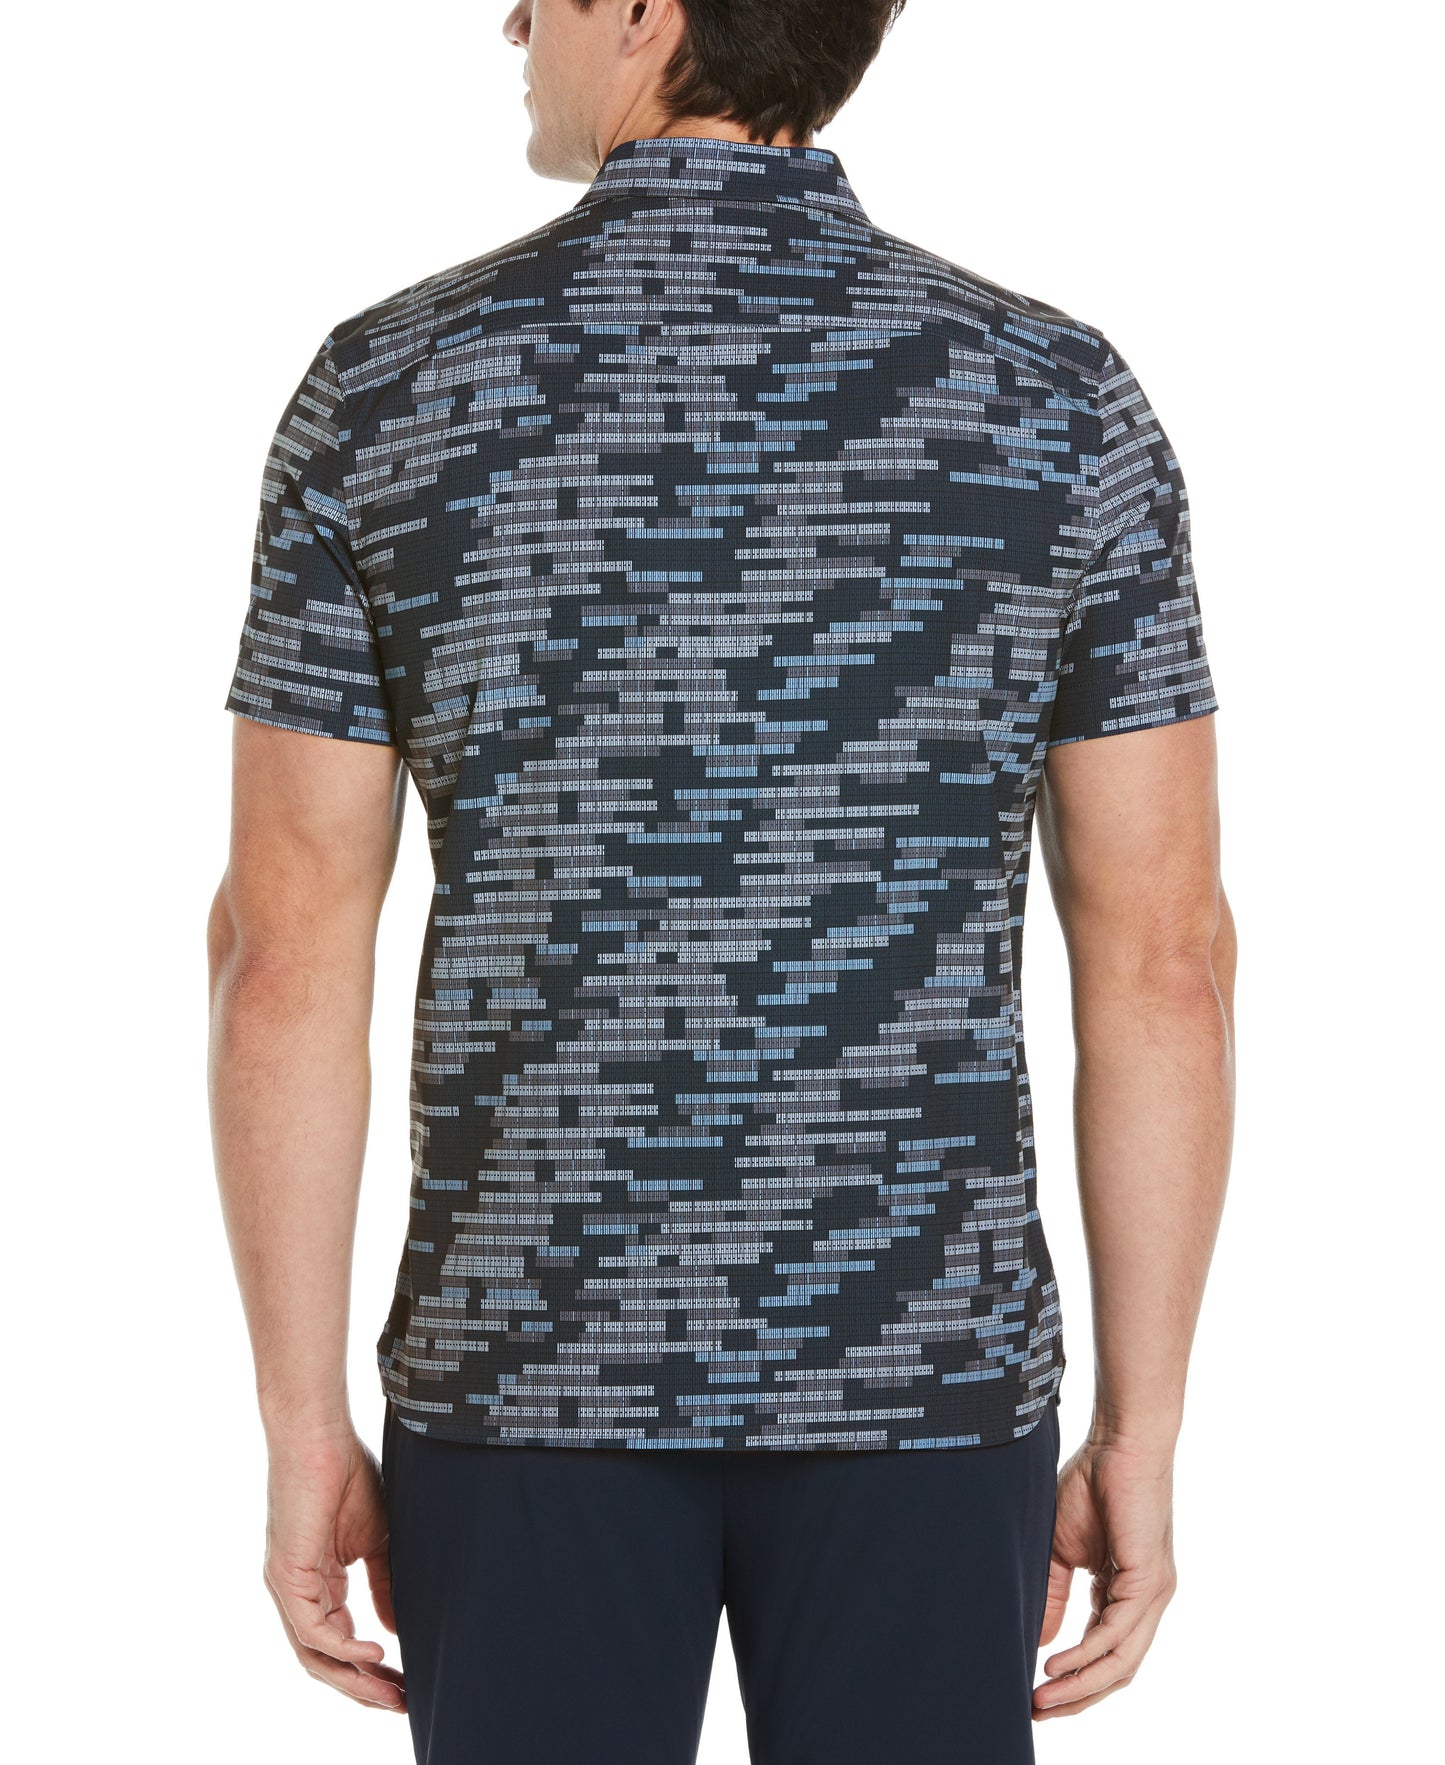 Total Stretch Slim Fit Graphic Print Shirt